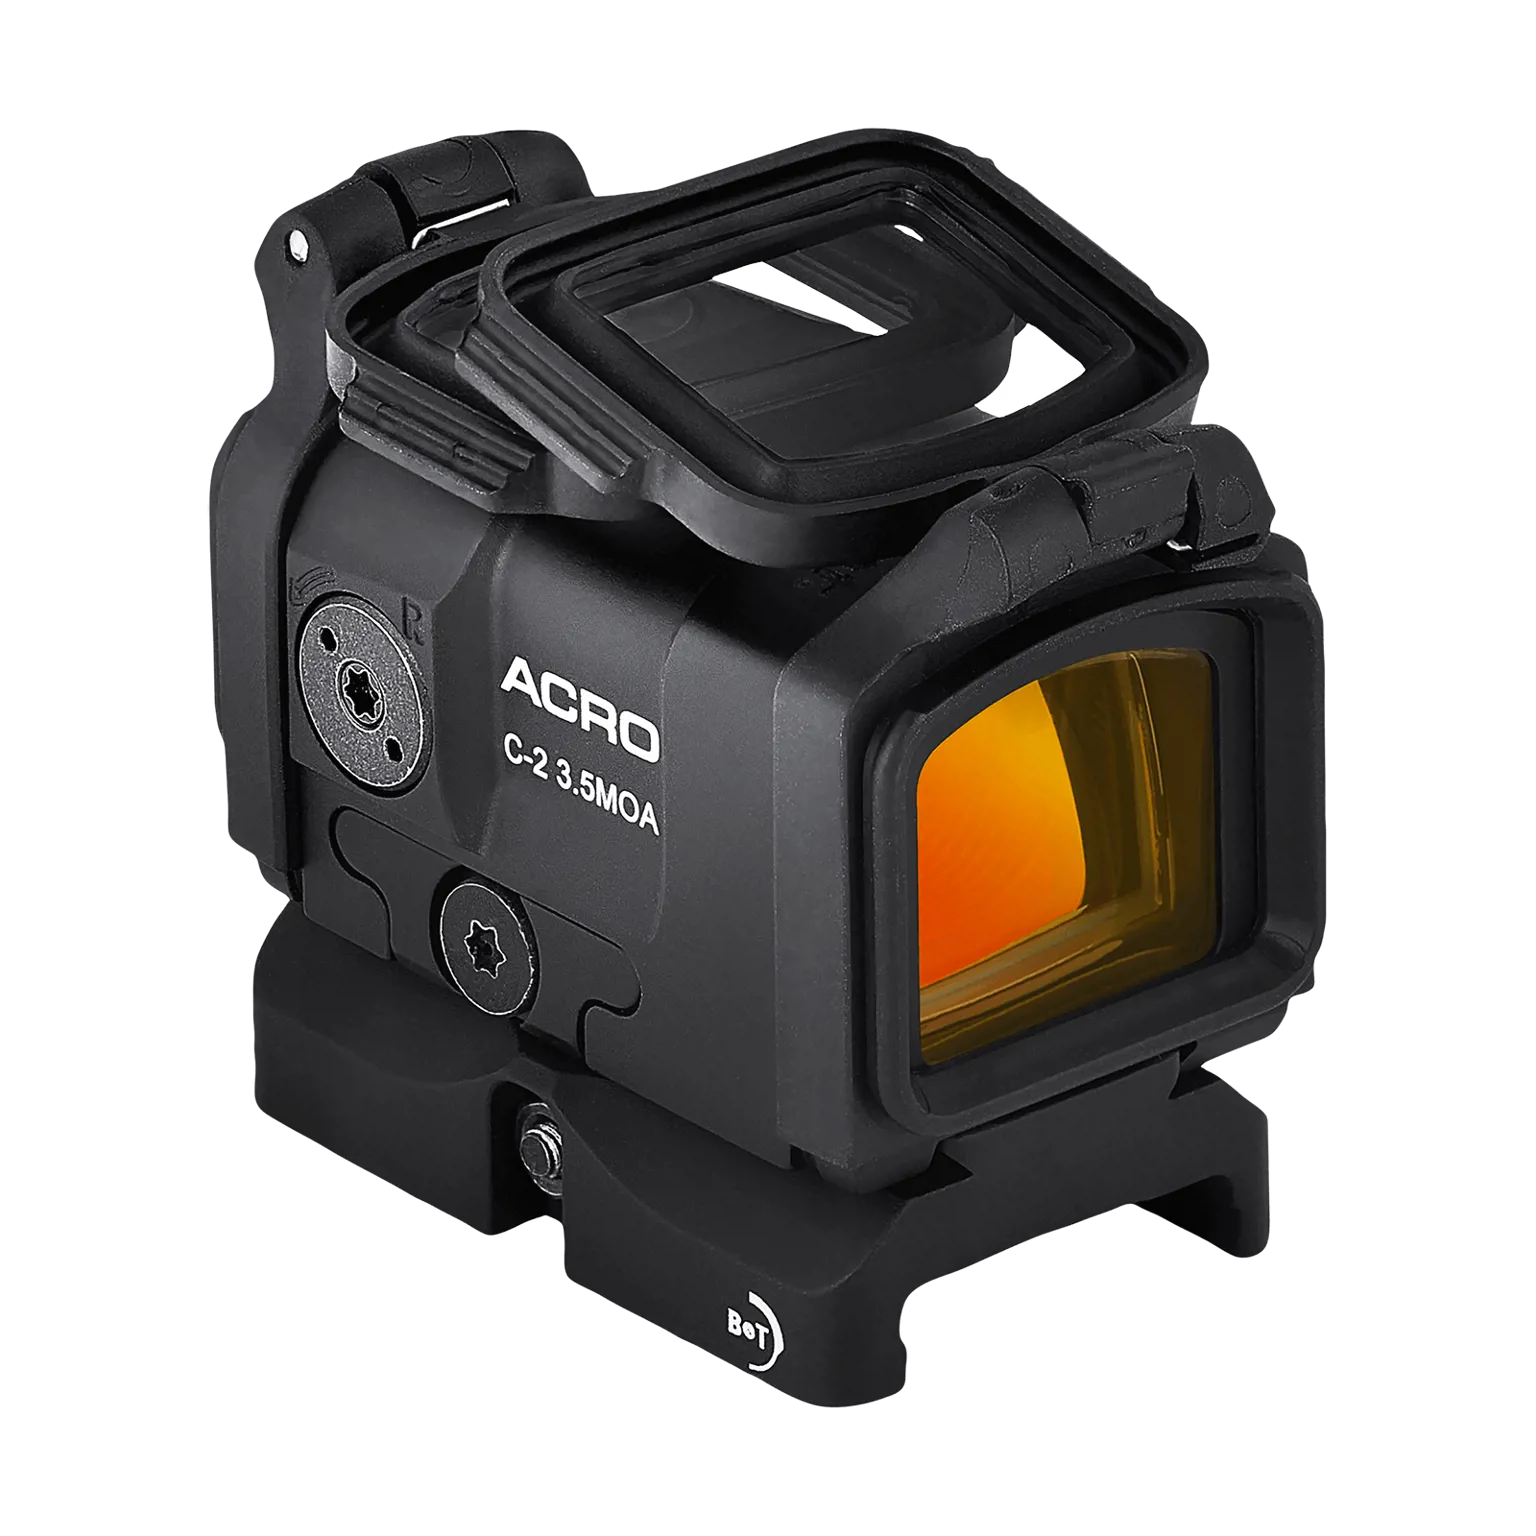 Acro C-2™ 3.5 MOA - Rotpunktvisier mit 22 mm Festmontage - 5